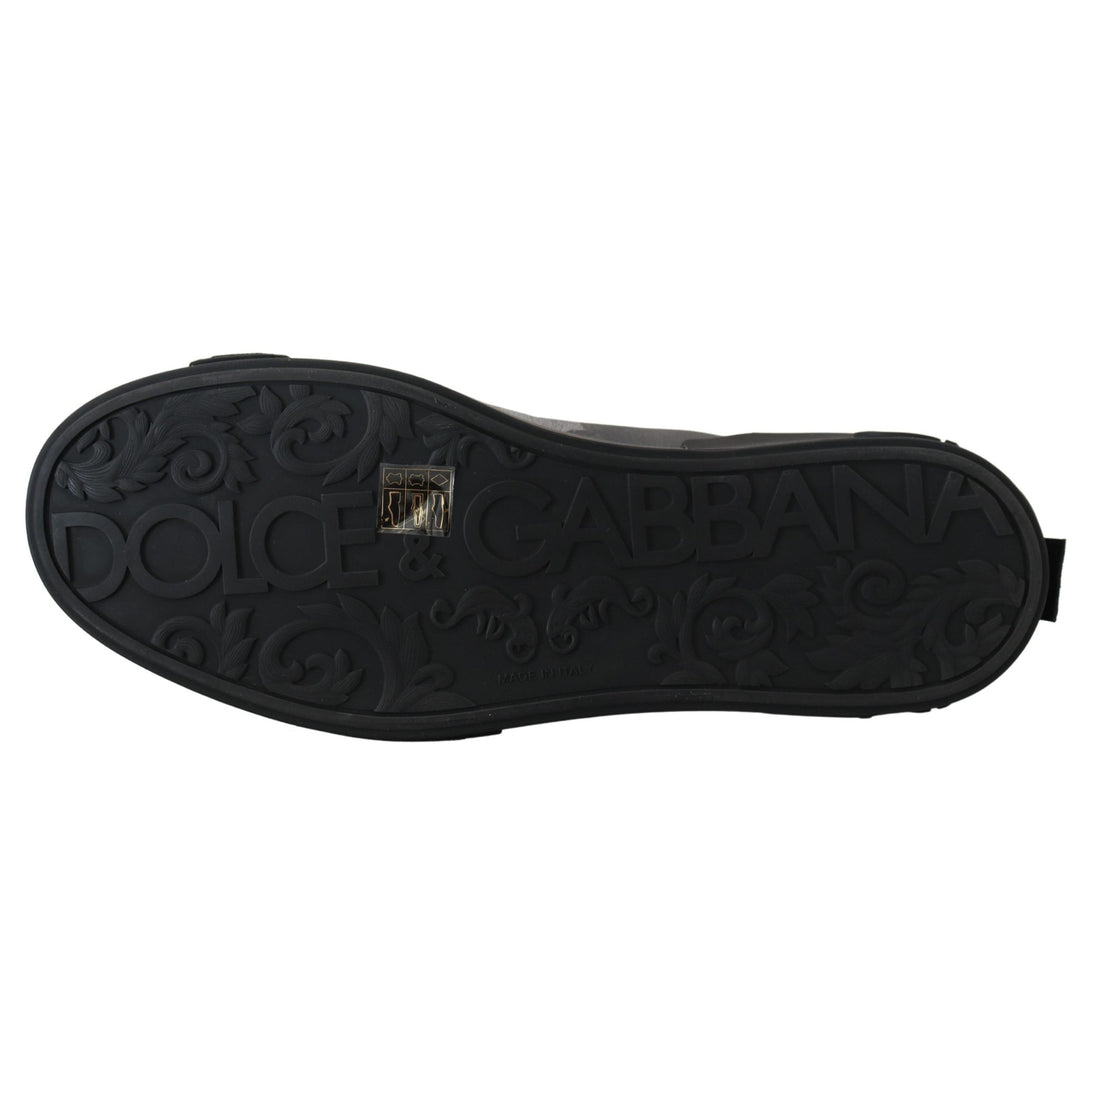 Dolce & Gabbana Camo Gray High-Top Sneakers